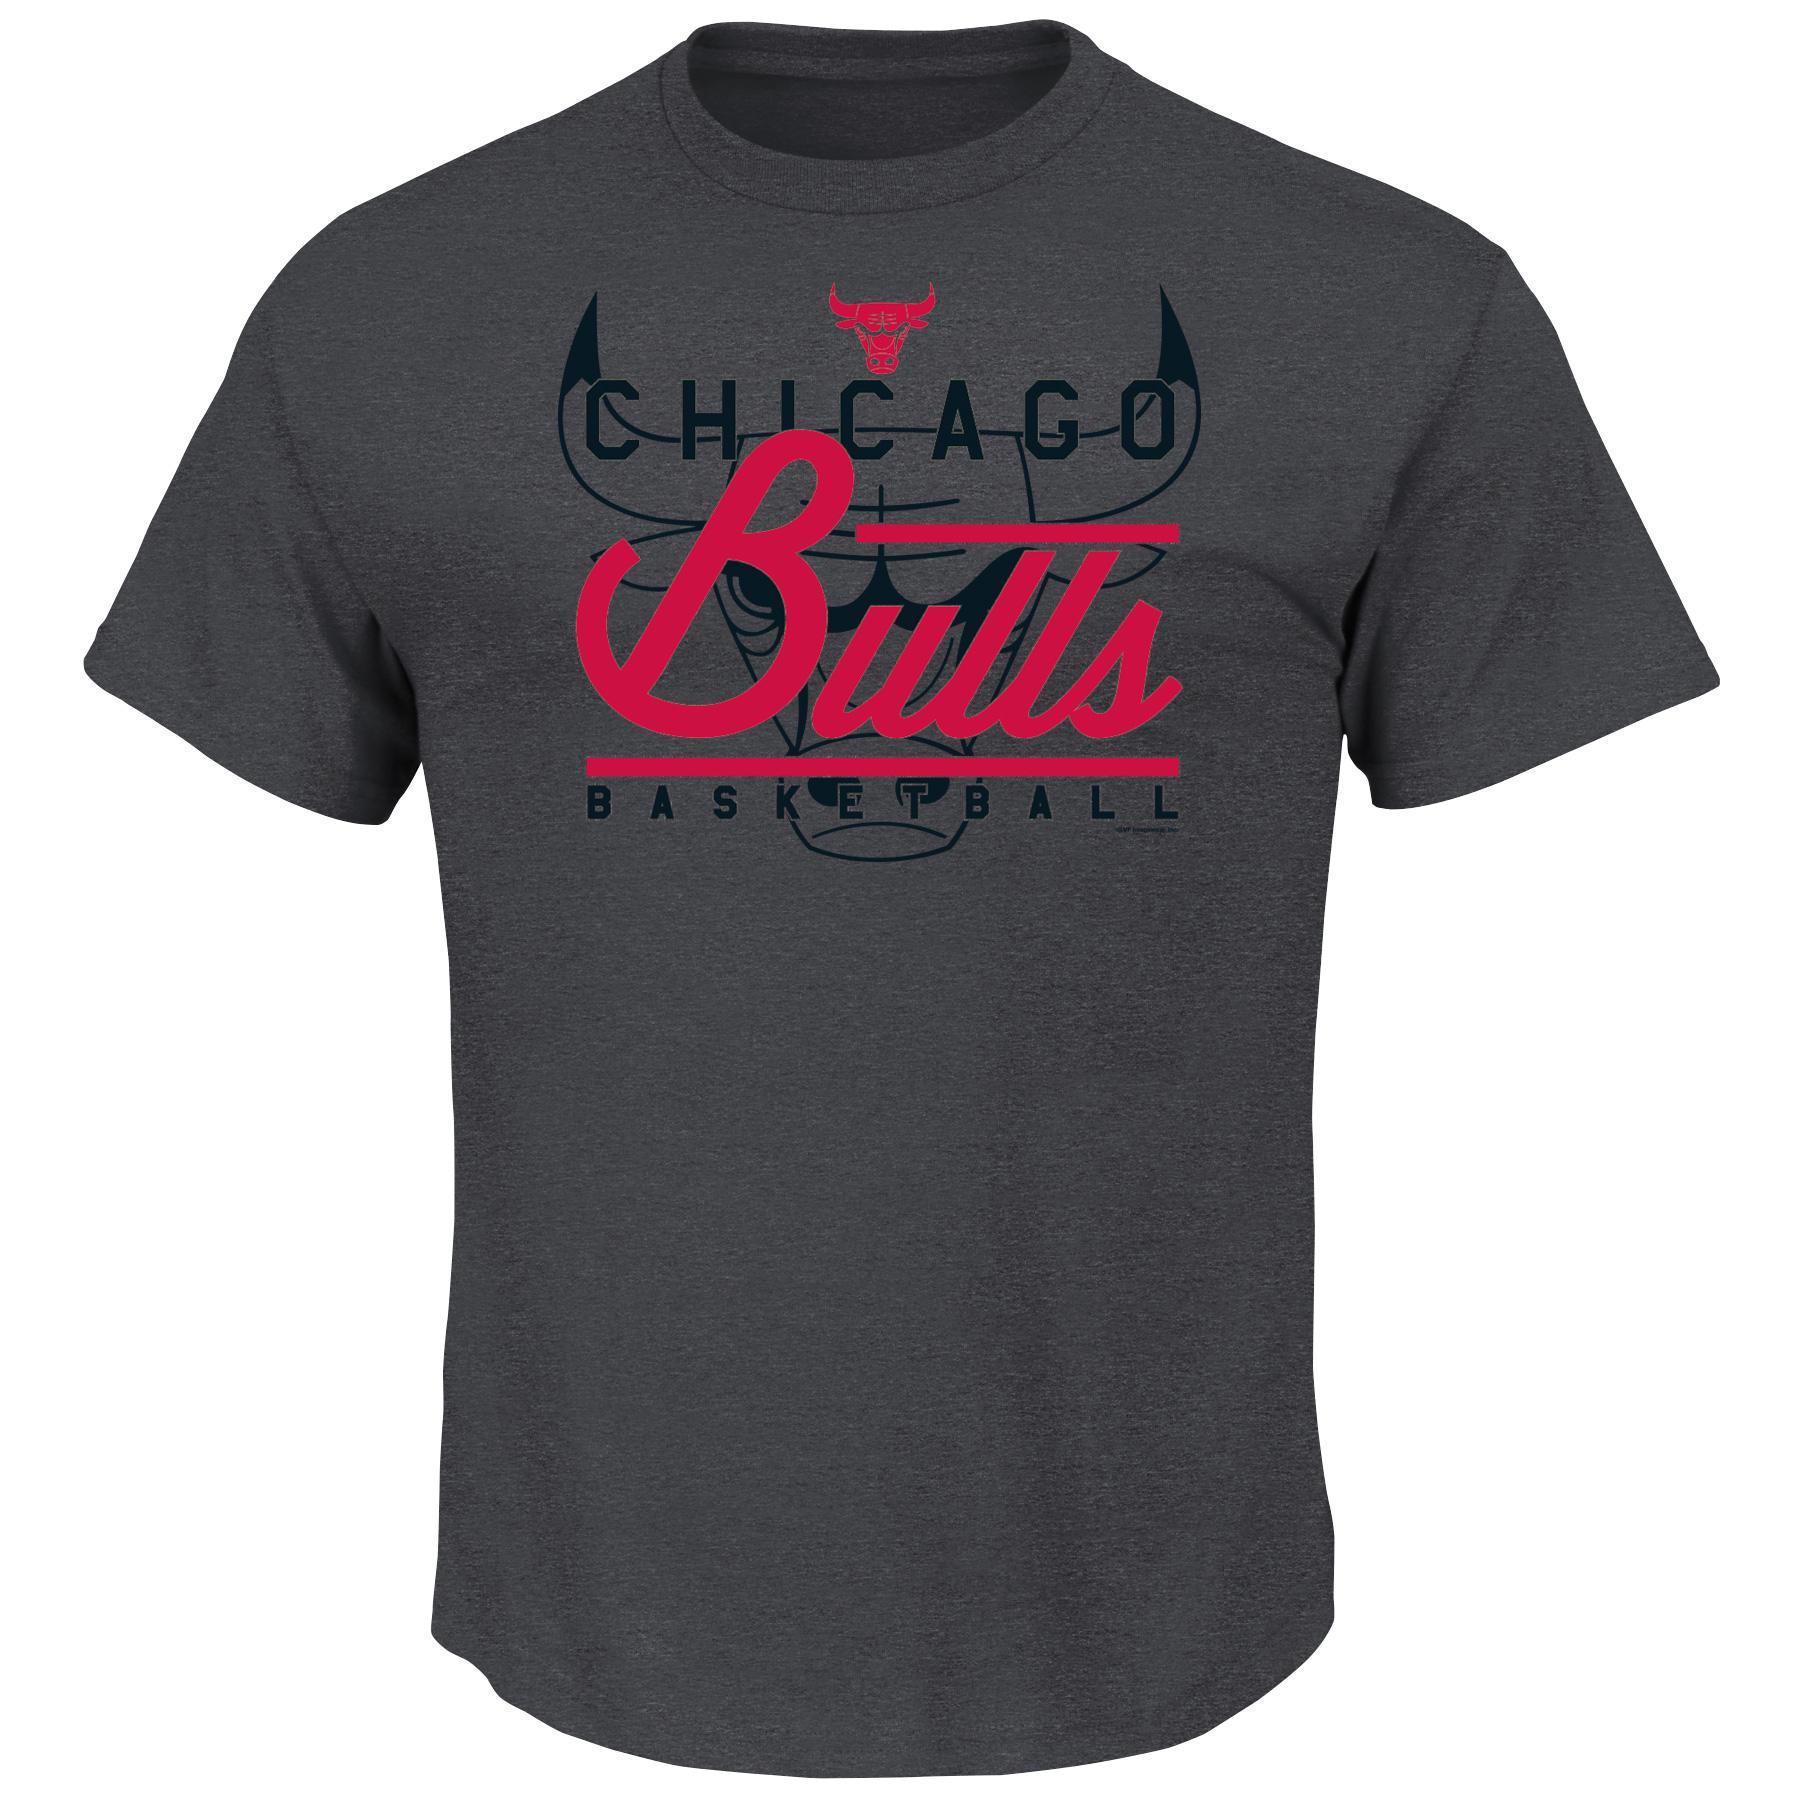 NBA(CANONICAL) Men's Gray Graphic T-Shirt - Chicago Bulls